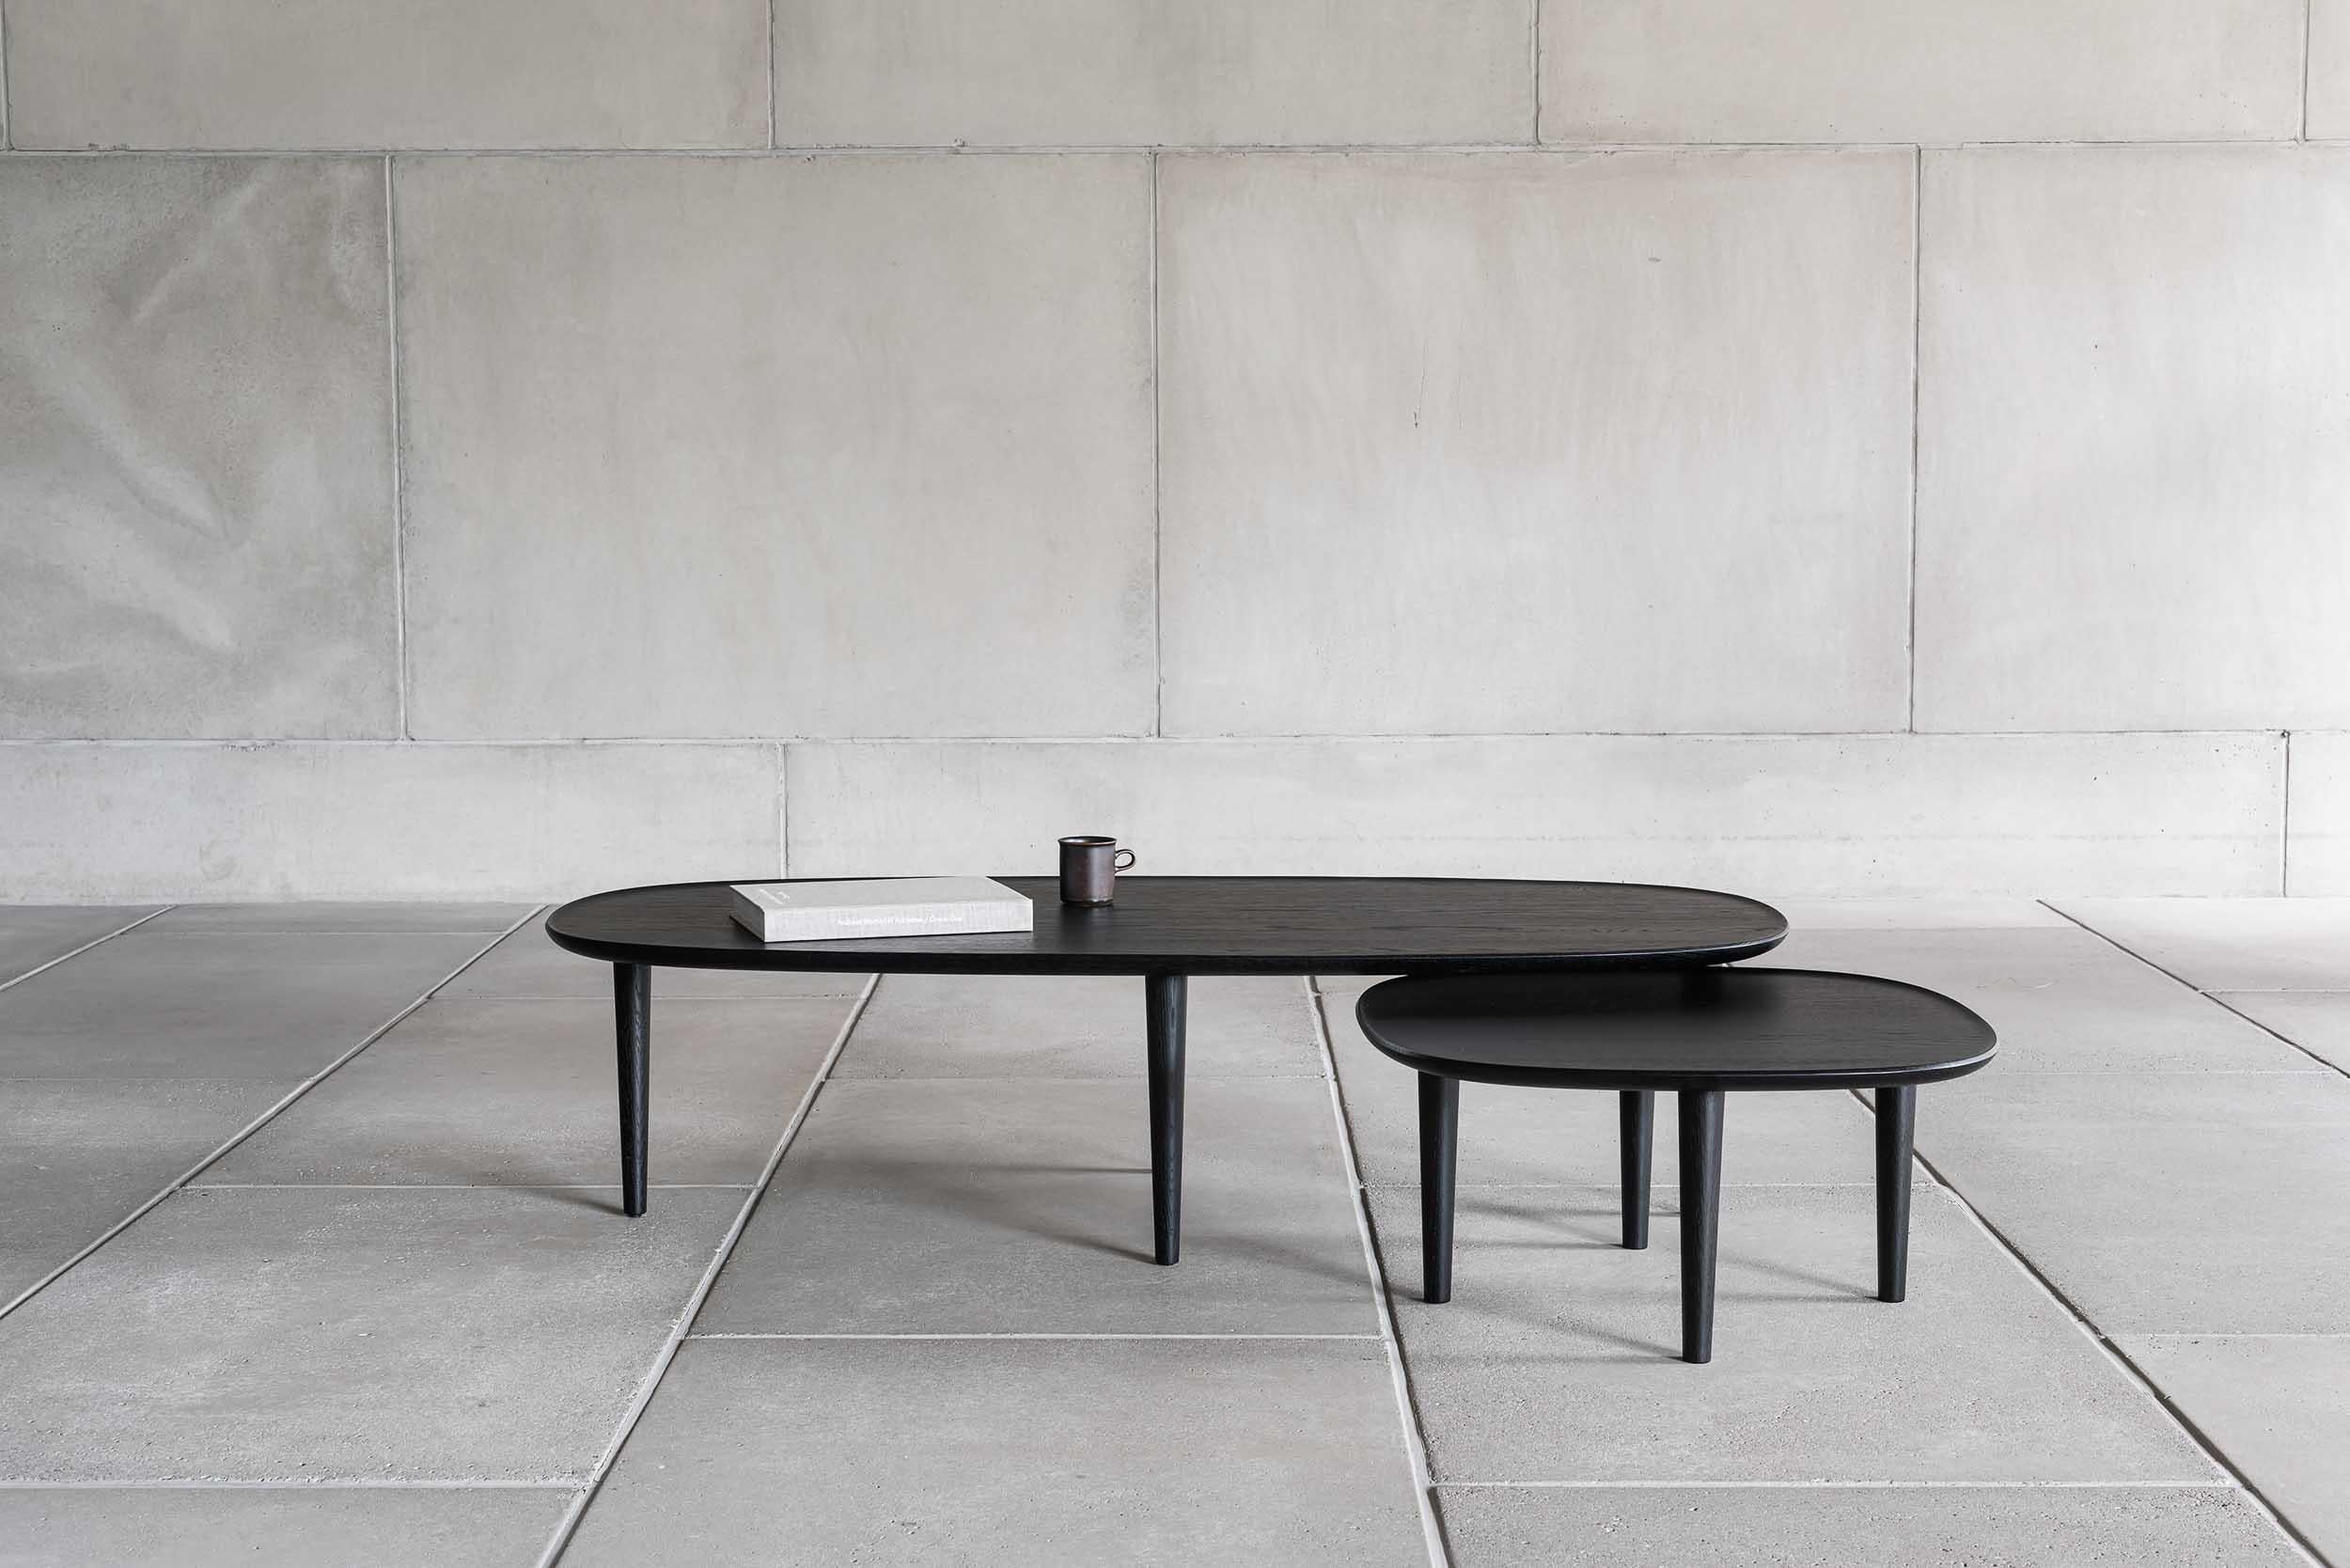 Fiori table 140 designed by Antrei Hartikainen x Poiat
Fiori Collection 2017

Available finishes: 
- Oak
- Dark oak 
- Black oak

Model shown in picture : 
- H. 35 x 140 x 65 cm
- Black Oak

Designed by Poiat Studio in collaboration with